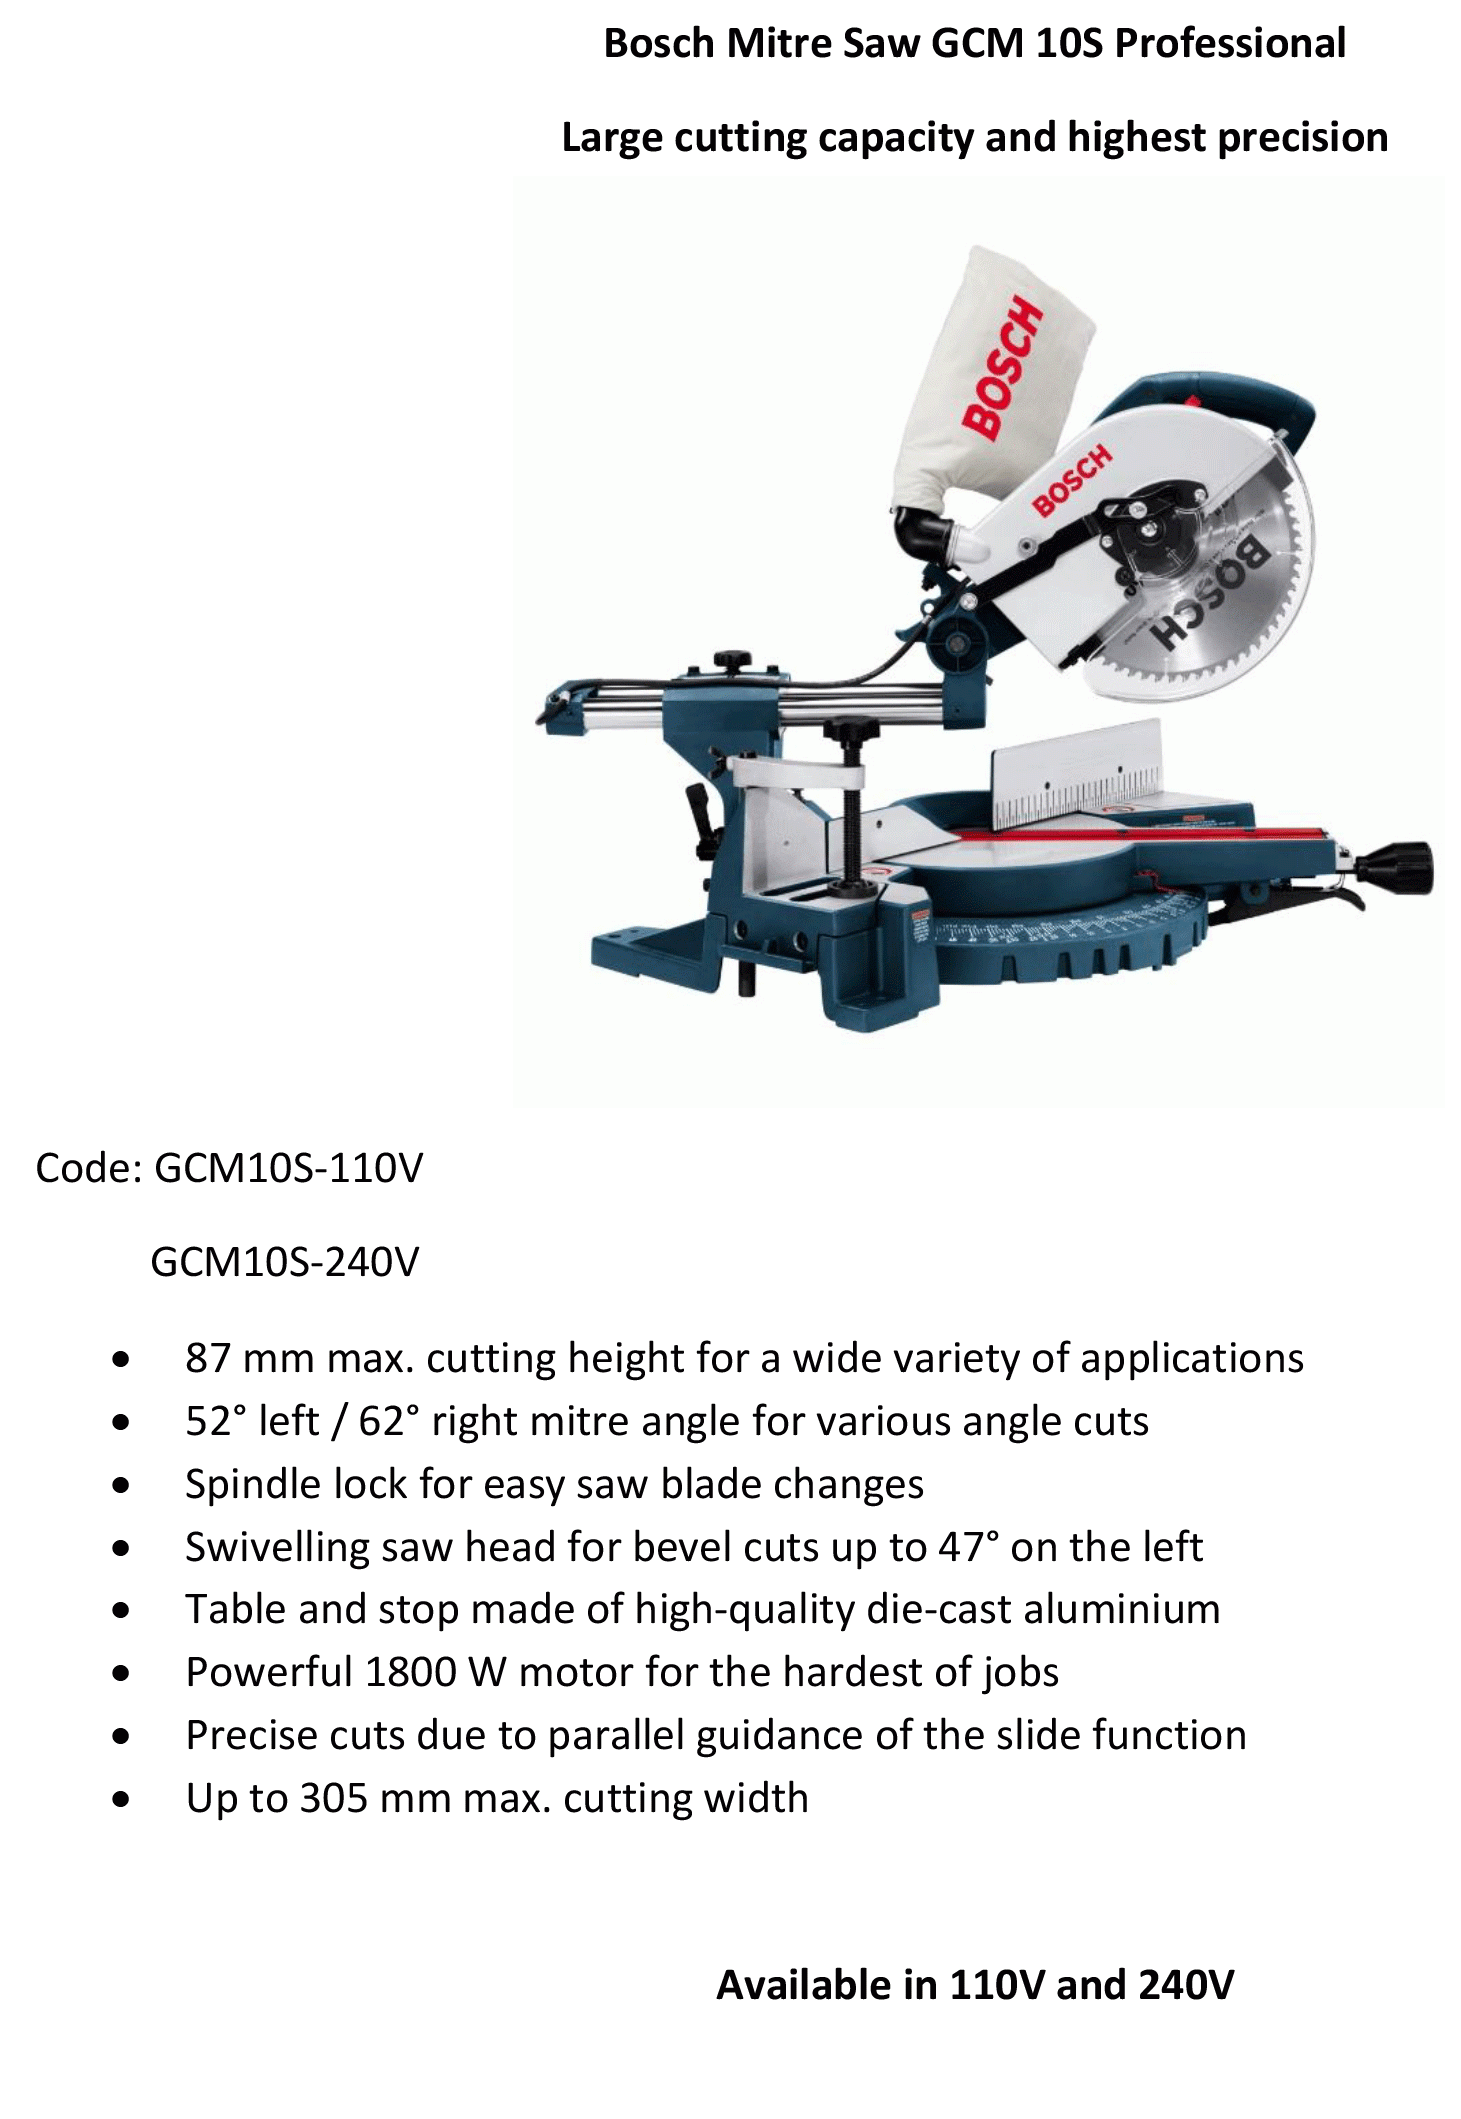 Bosch-Mitre-Saw-GCM-10S-Professional-inf